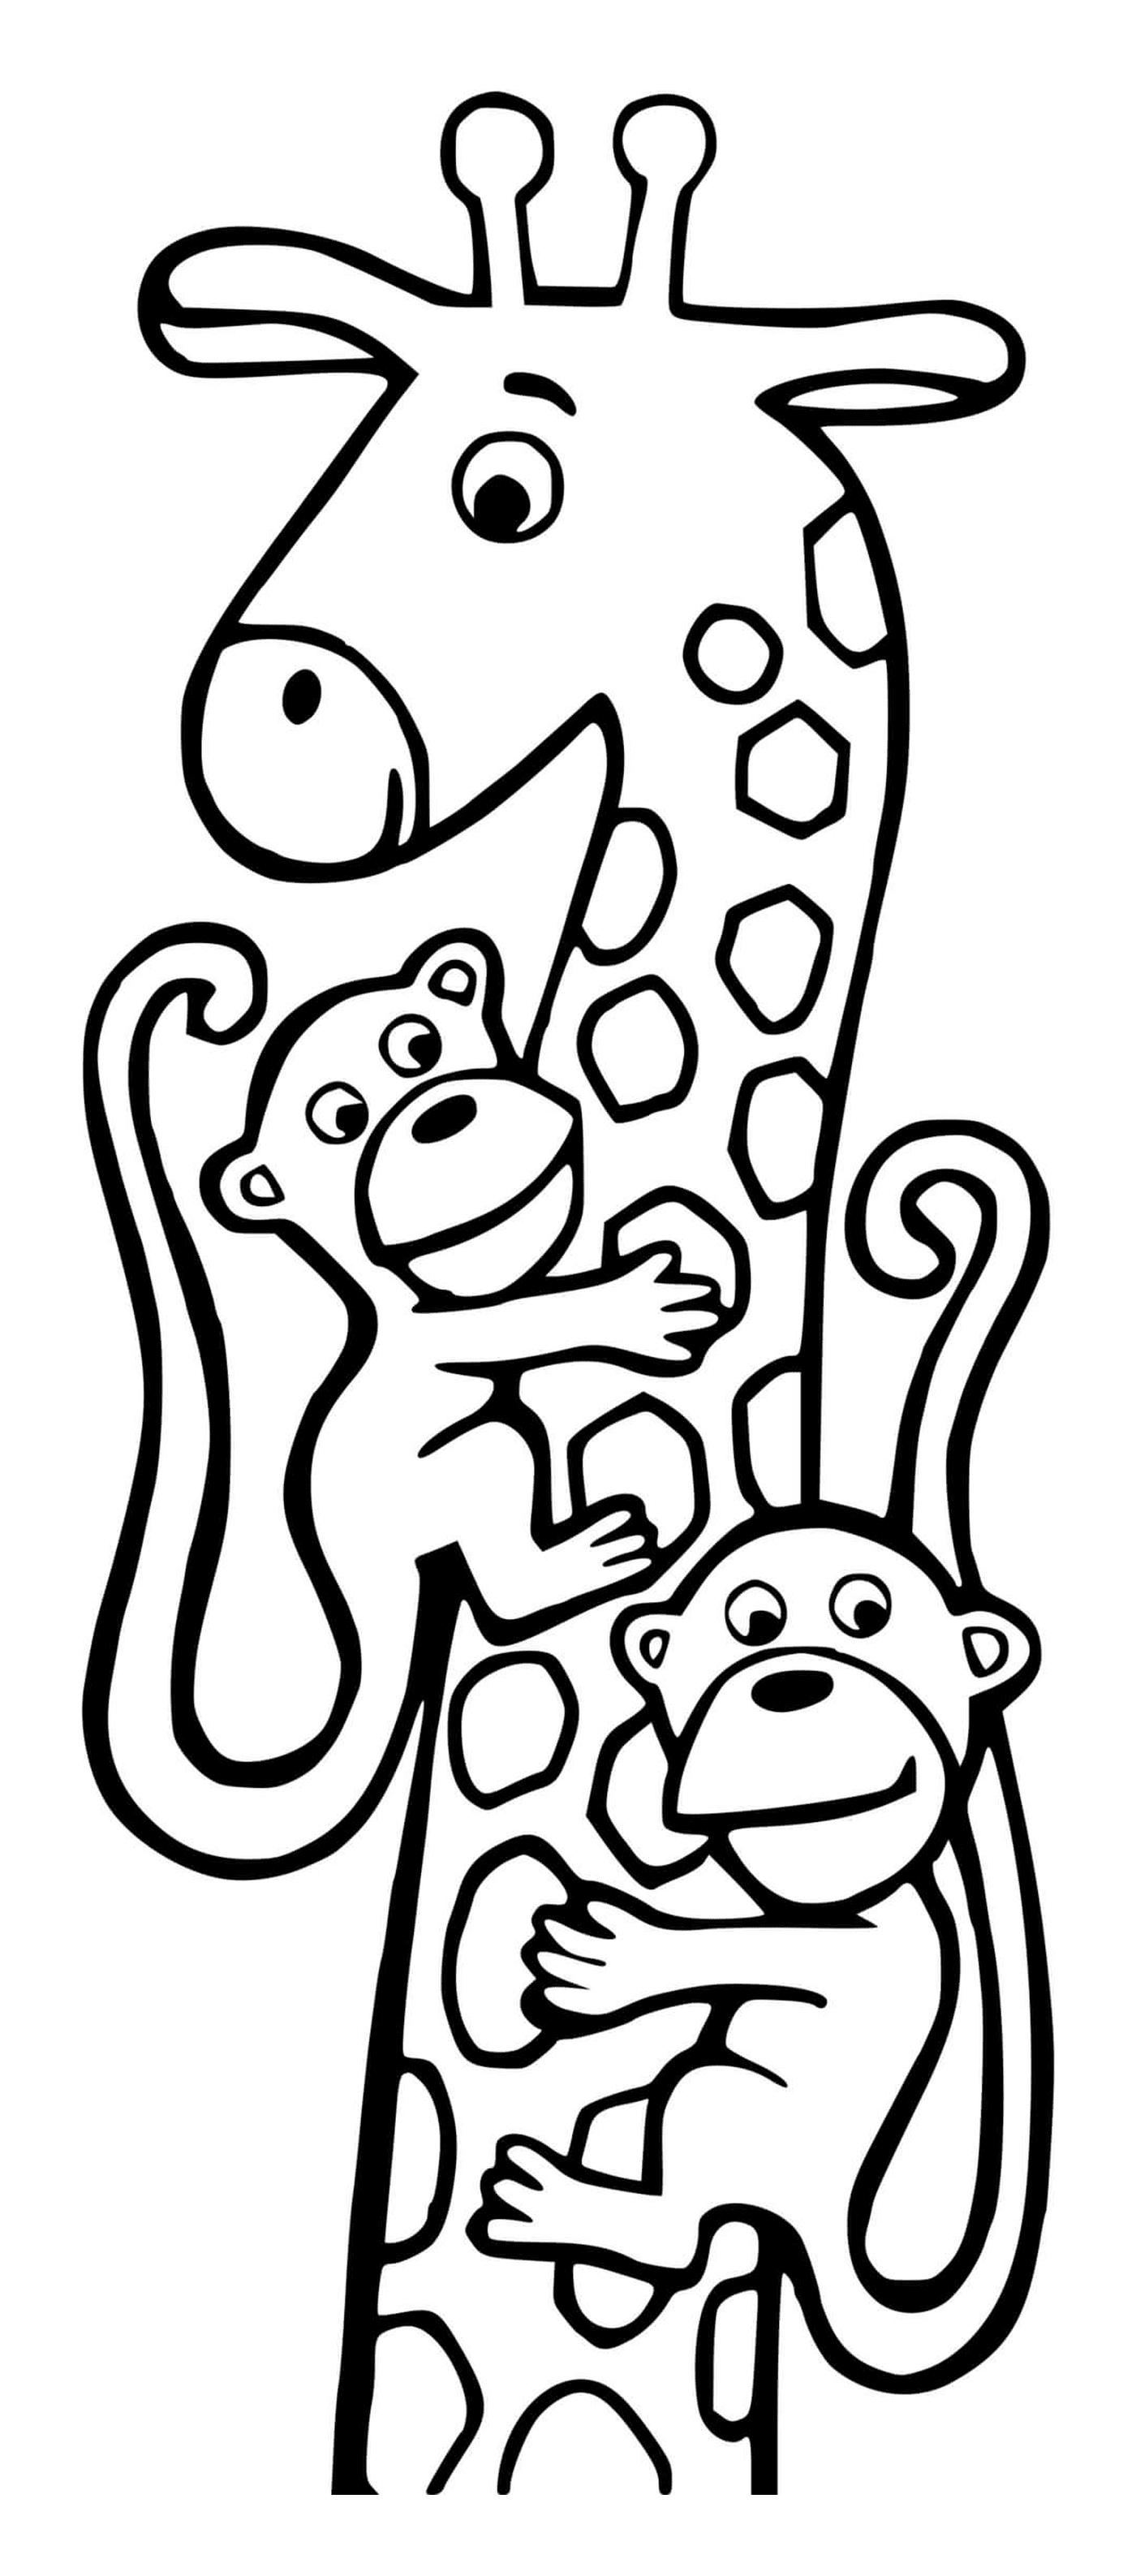  Girafe e dois macacos 